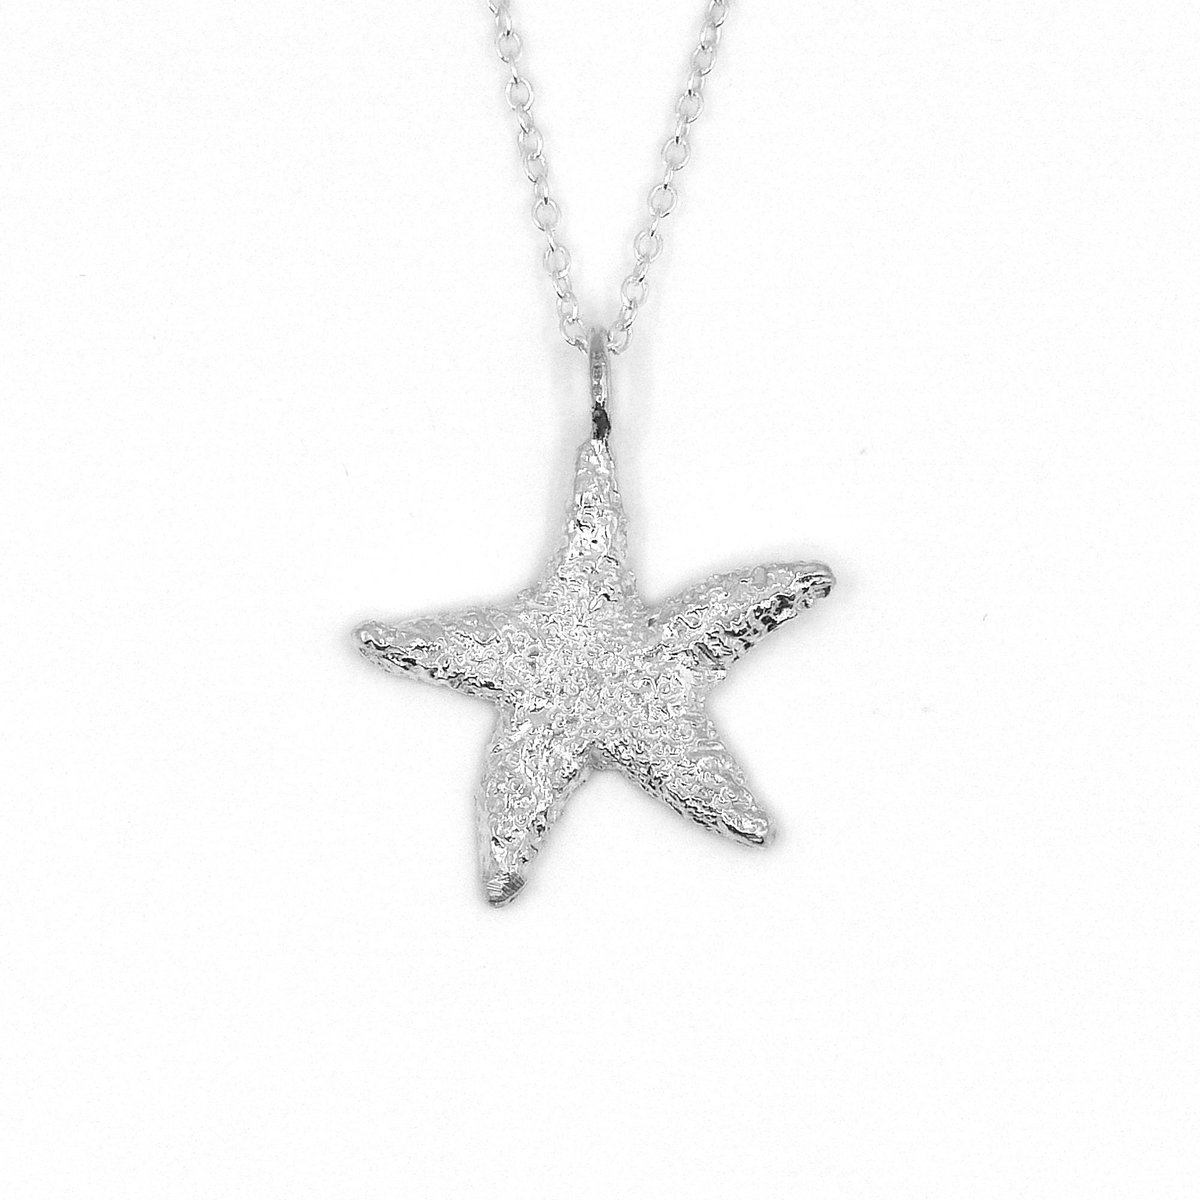 Handmade Silver Starfish Necklace Silver Starfish Pendant Cast Silver Starfish Starfish Necklace Mermaid Necklace Gift For Friend tuppu.net/933f3271 #shopindie #elevenseshour #thestrandline #HandmadeHour #womaninbizhour #UKGiftAM #EarlyBiz #MHHSBD